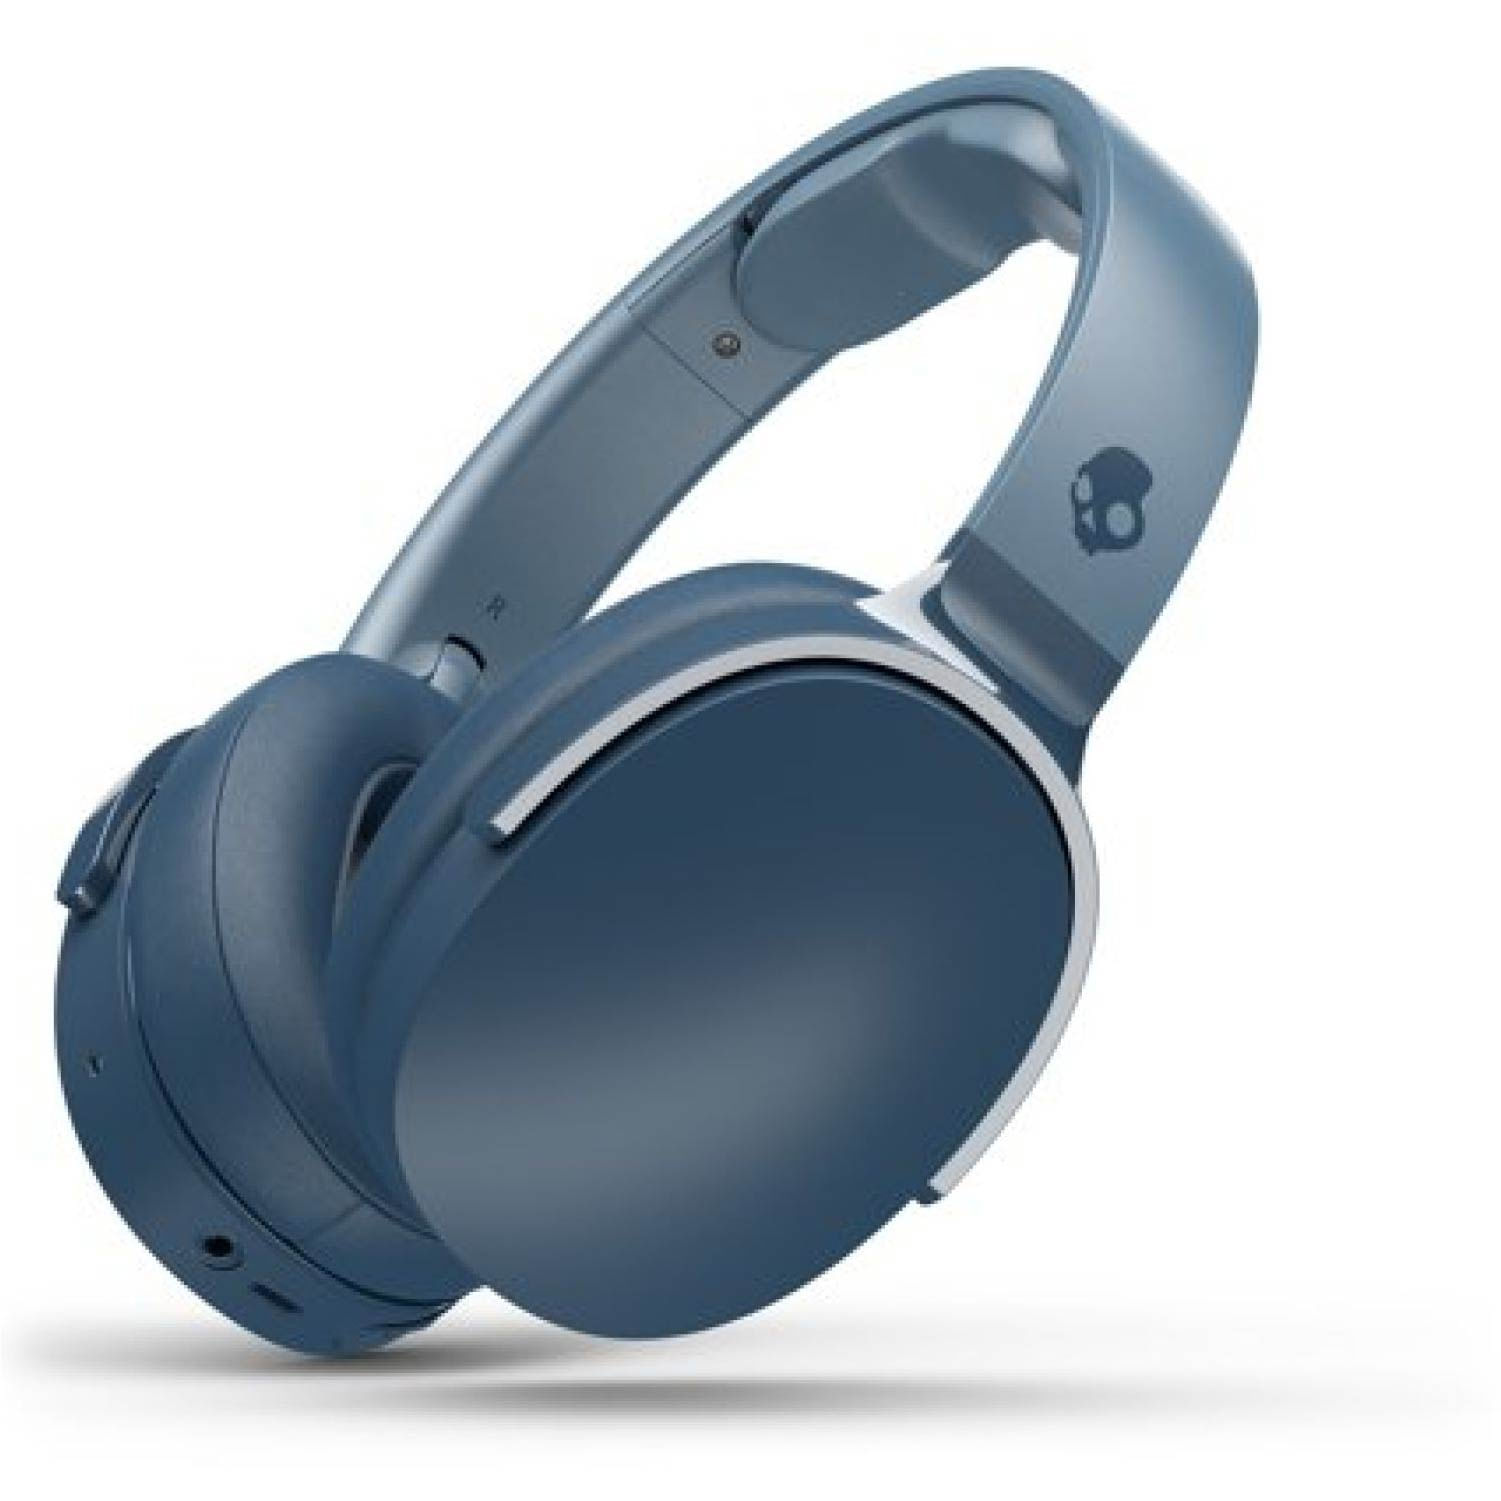 Audífono Skullcandy Hesh 3 Wireless Perfection azul Bluetooth Precio Online